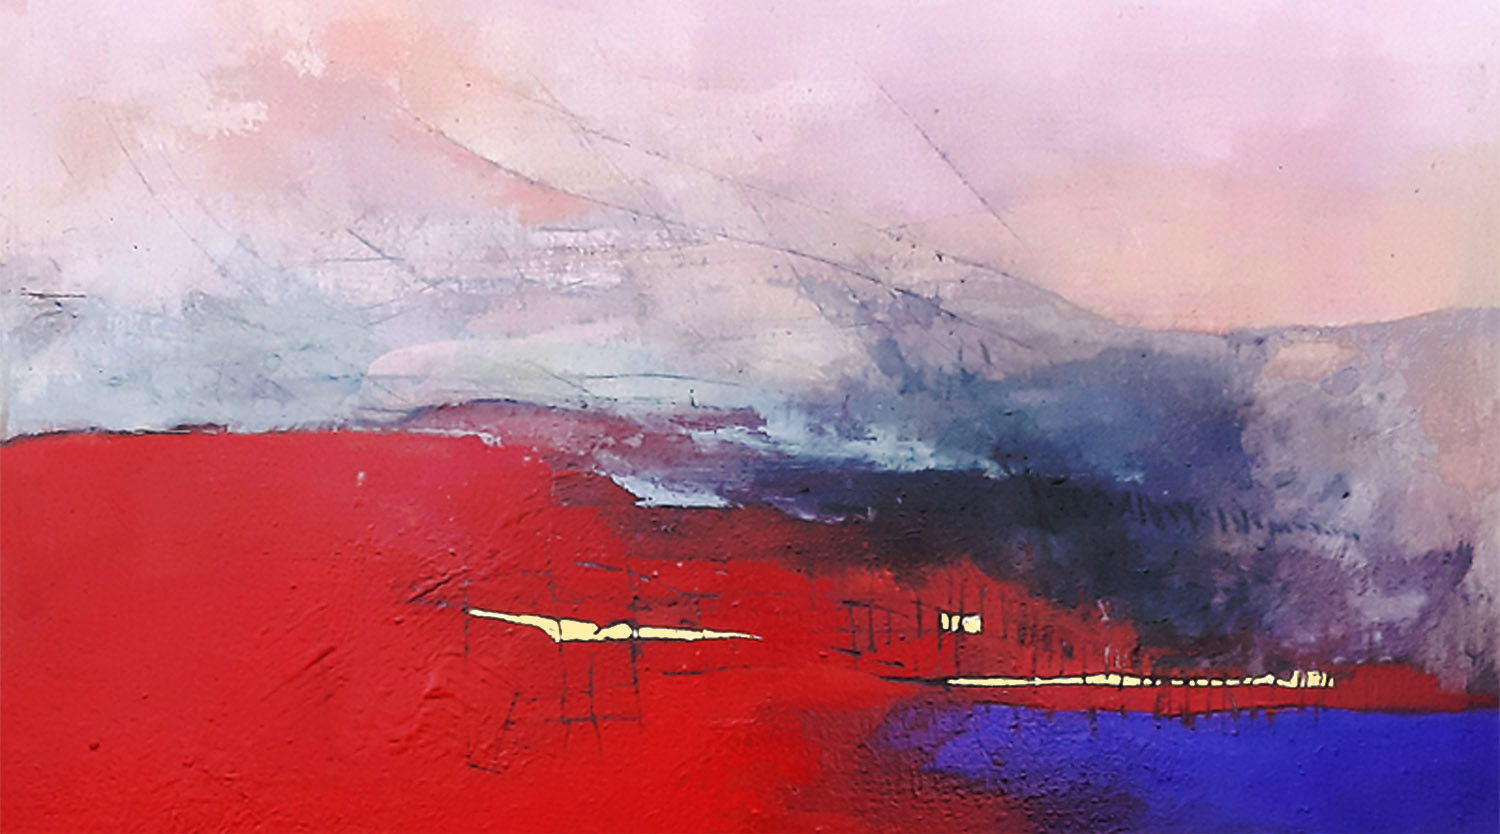 Paesaggio in Rosso,acrilico su tela,acrylic on canvas, paintings of abstract landscapes by Sergio Aiello contemporary artist at sergioaiello.com